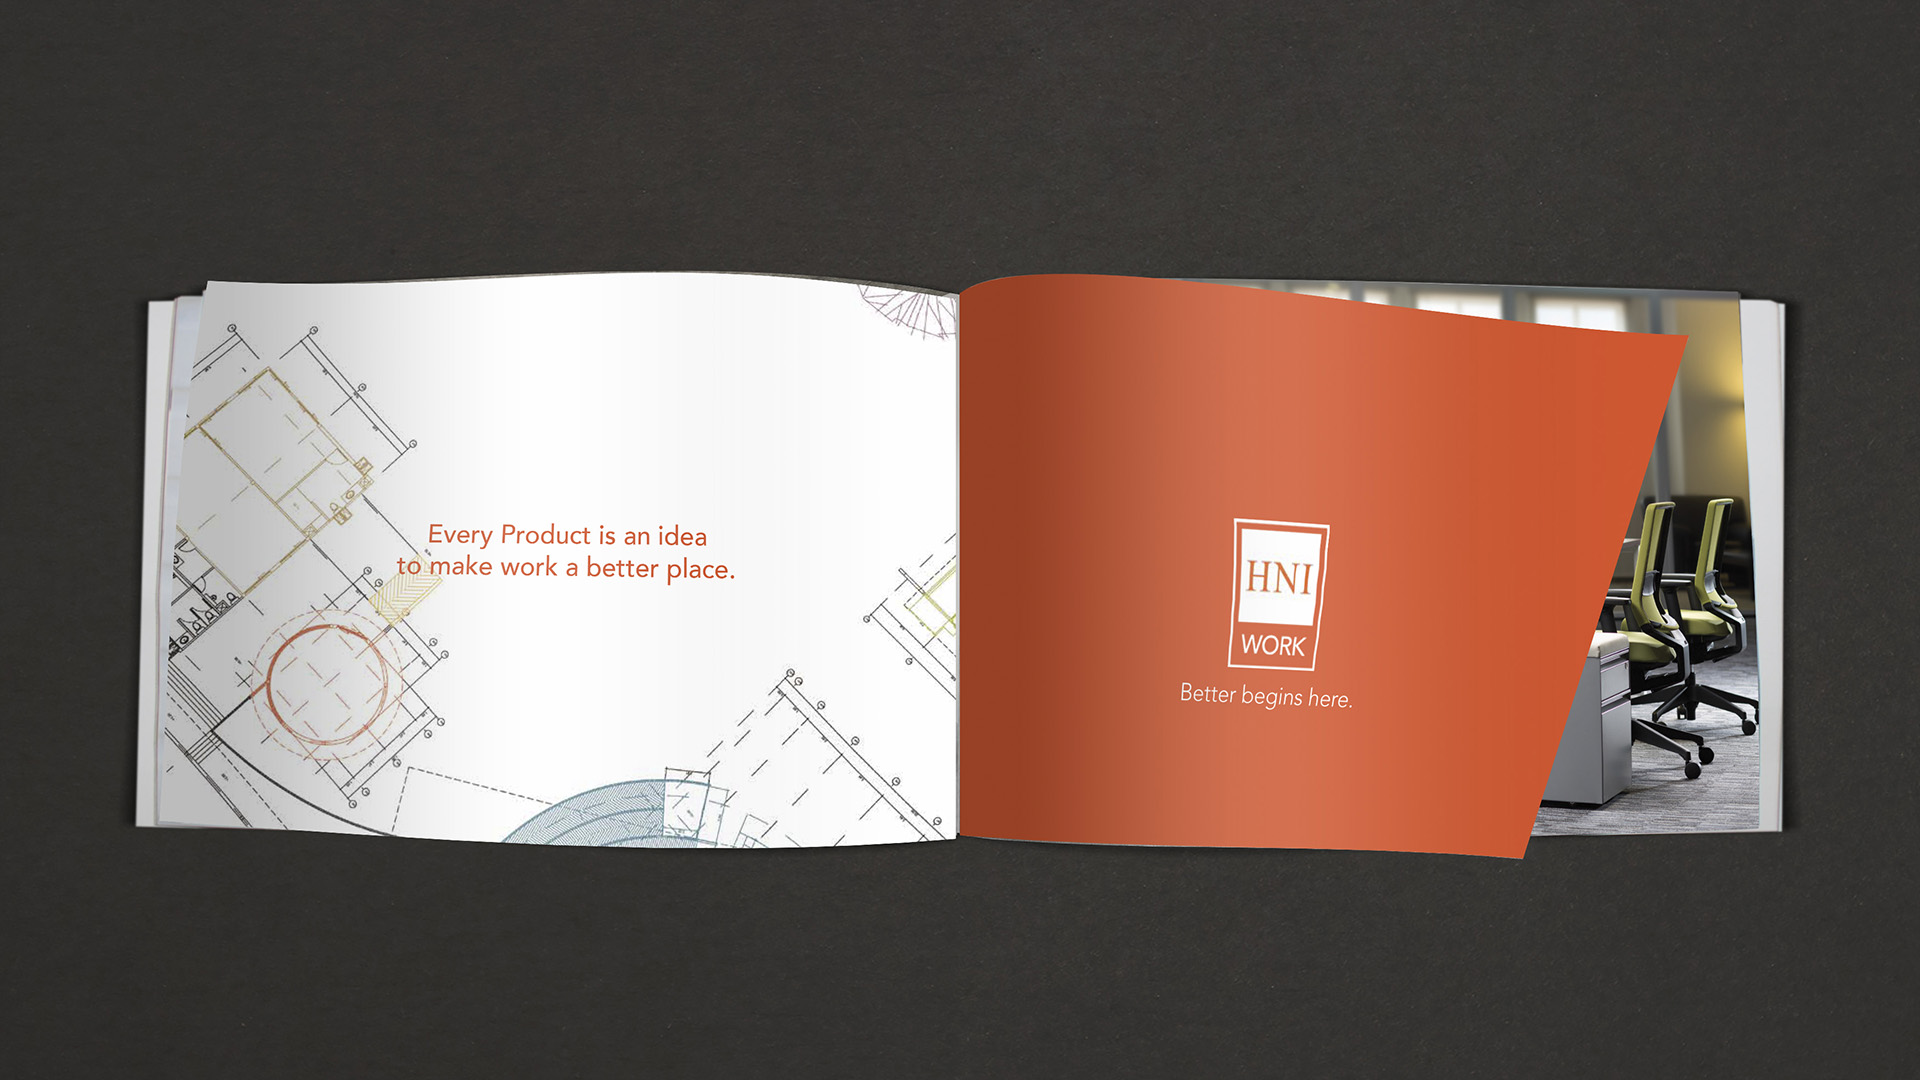 D2 Studio 市场营销策划, 品牌策划与平面设计公司的香港及广州中国团队为furniture brand安排平面设计与企业刊物设计graphic design and brochure design 2